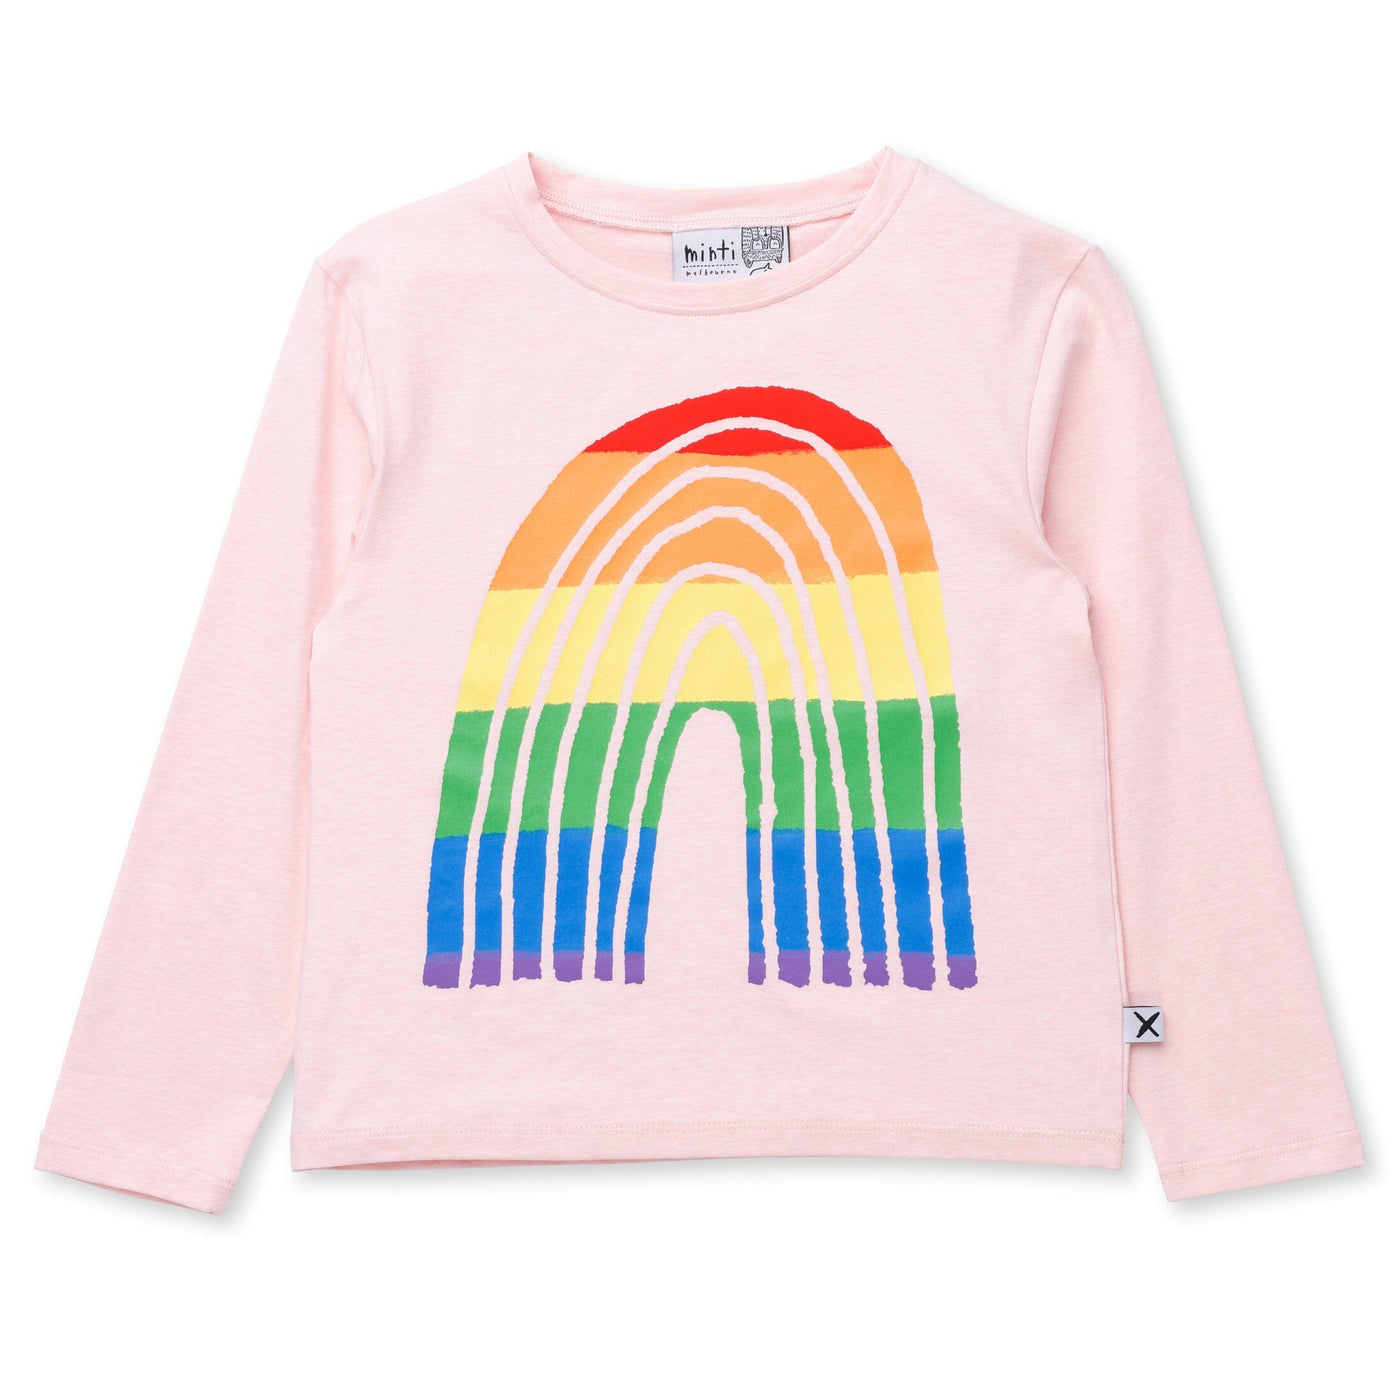 Minti Stripey Rainbow Tee - Pink Marle Long Sleeve T-Shirt Minti 